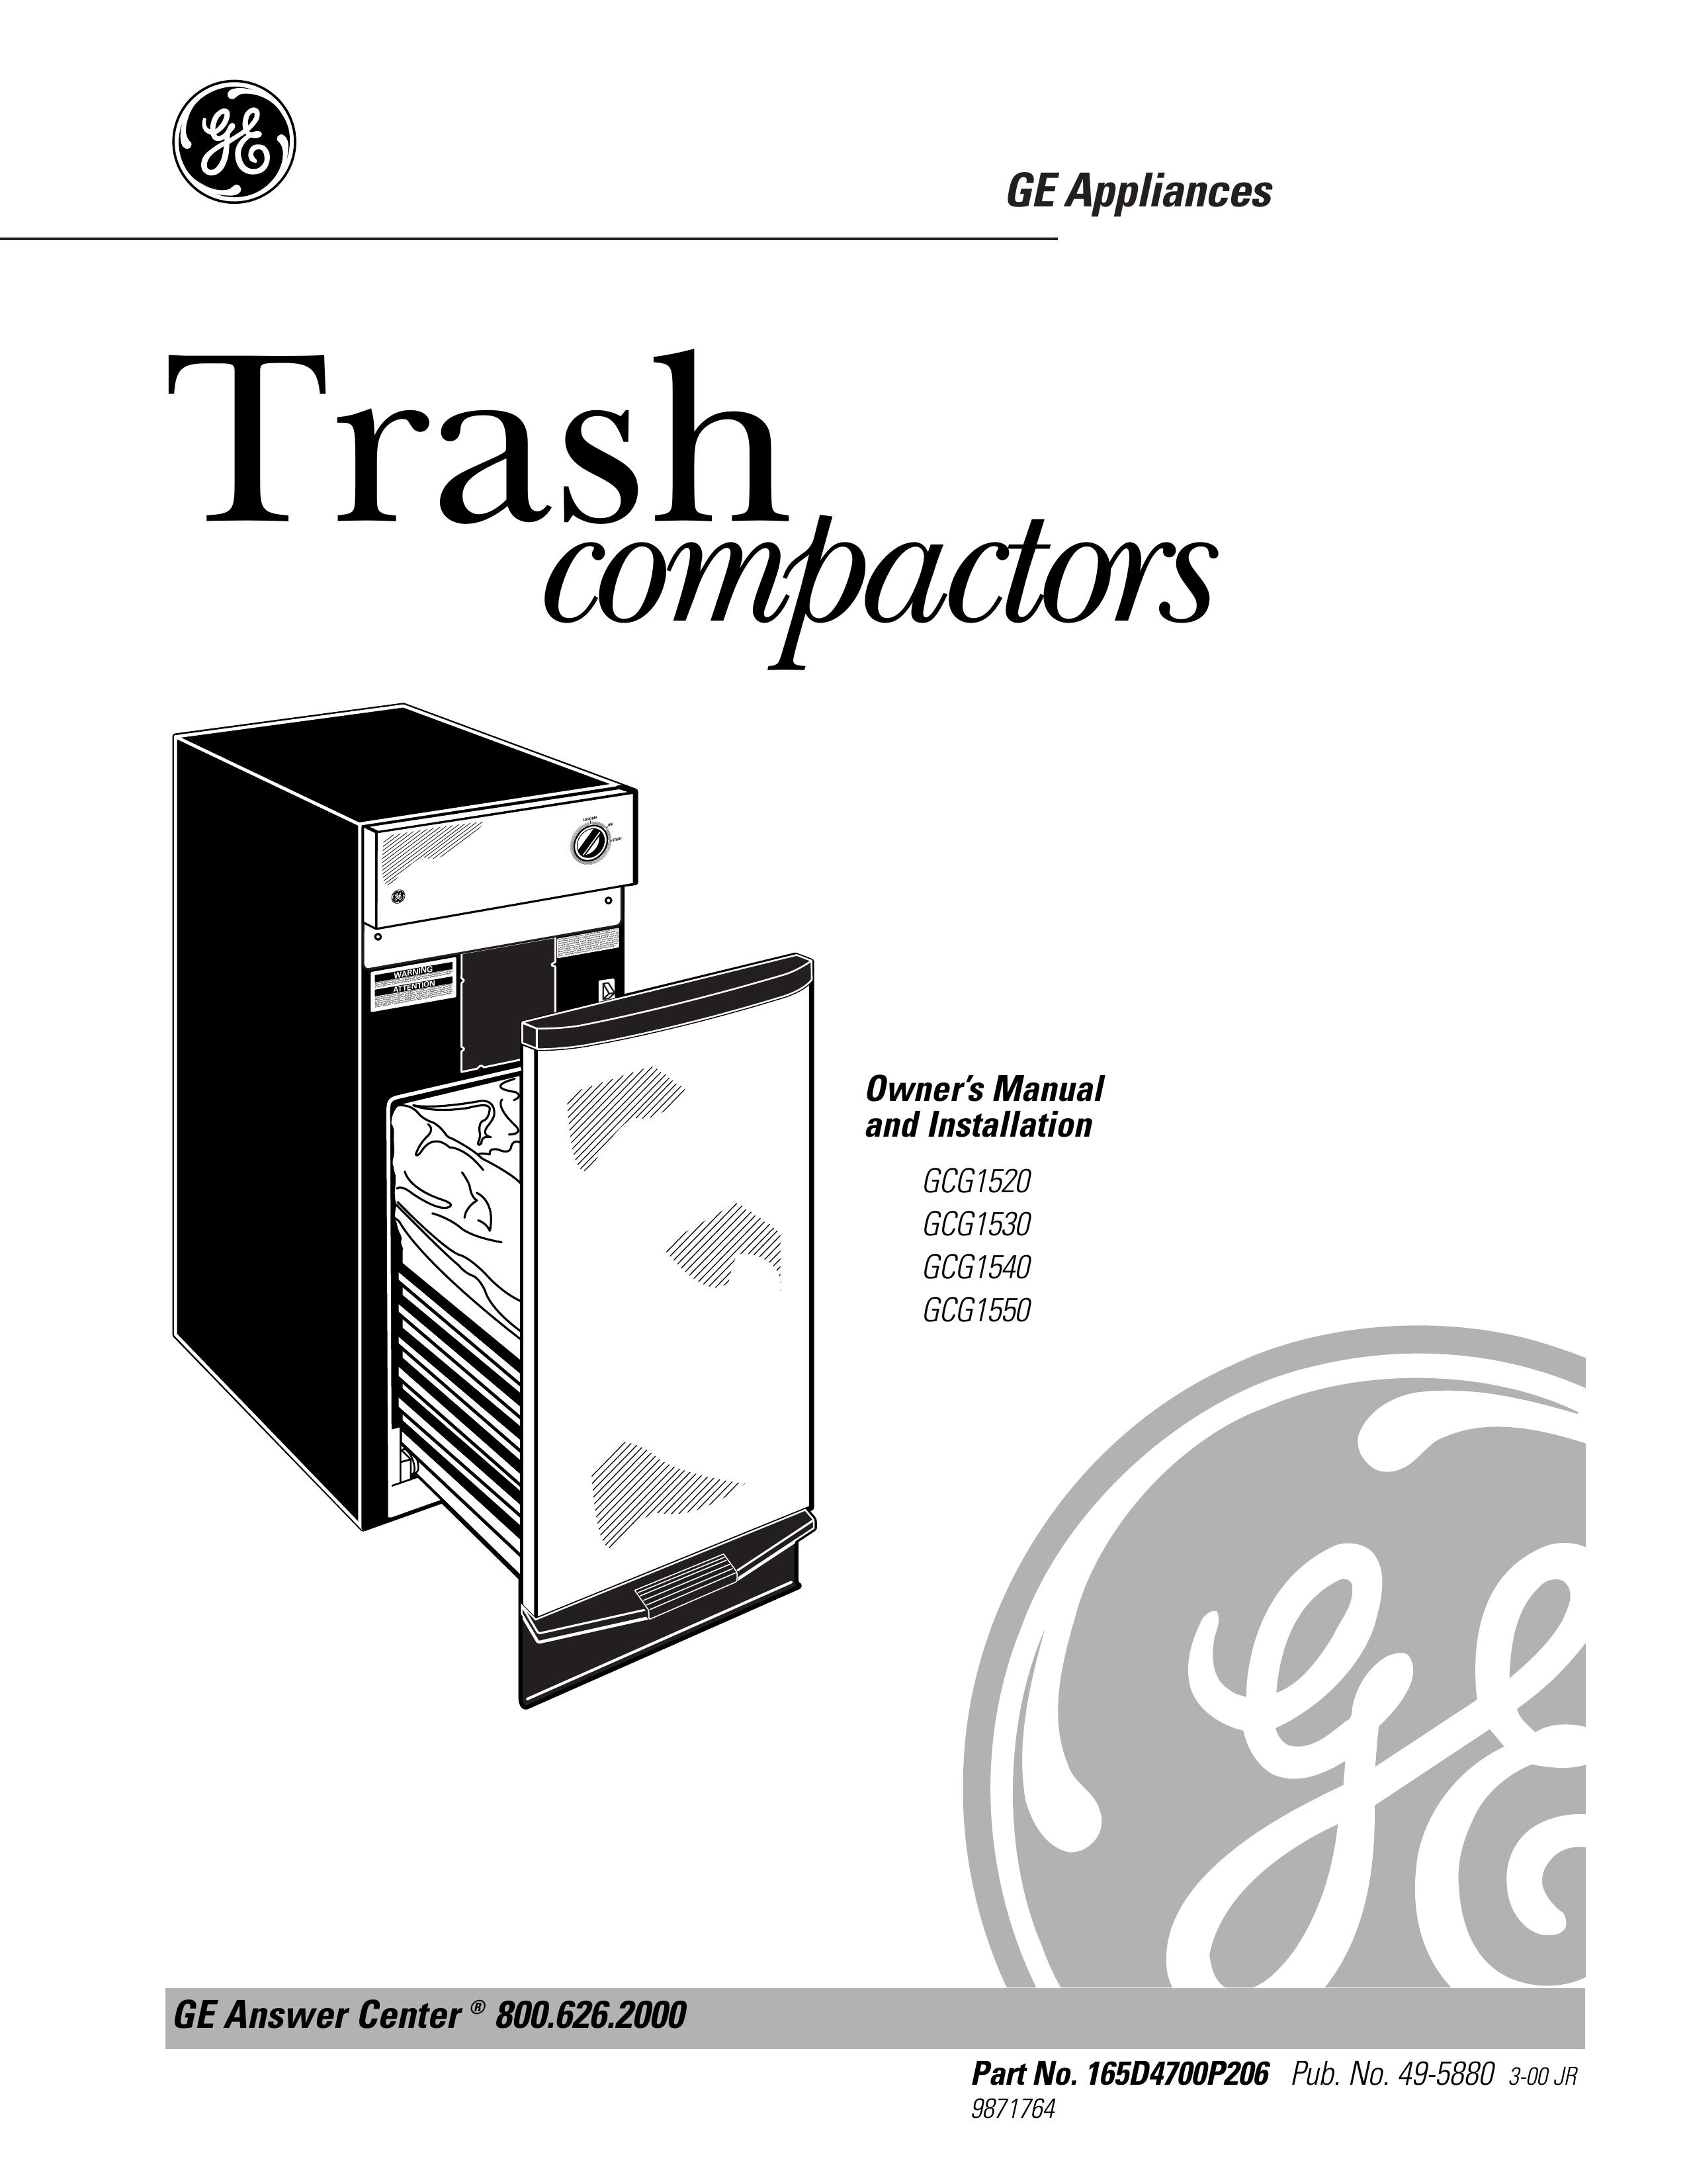 GE GCG1520 Trash Compactor User Manual